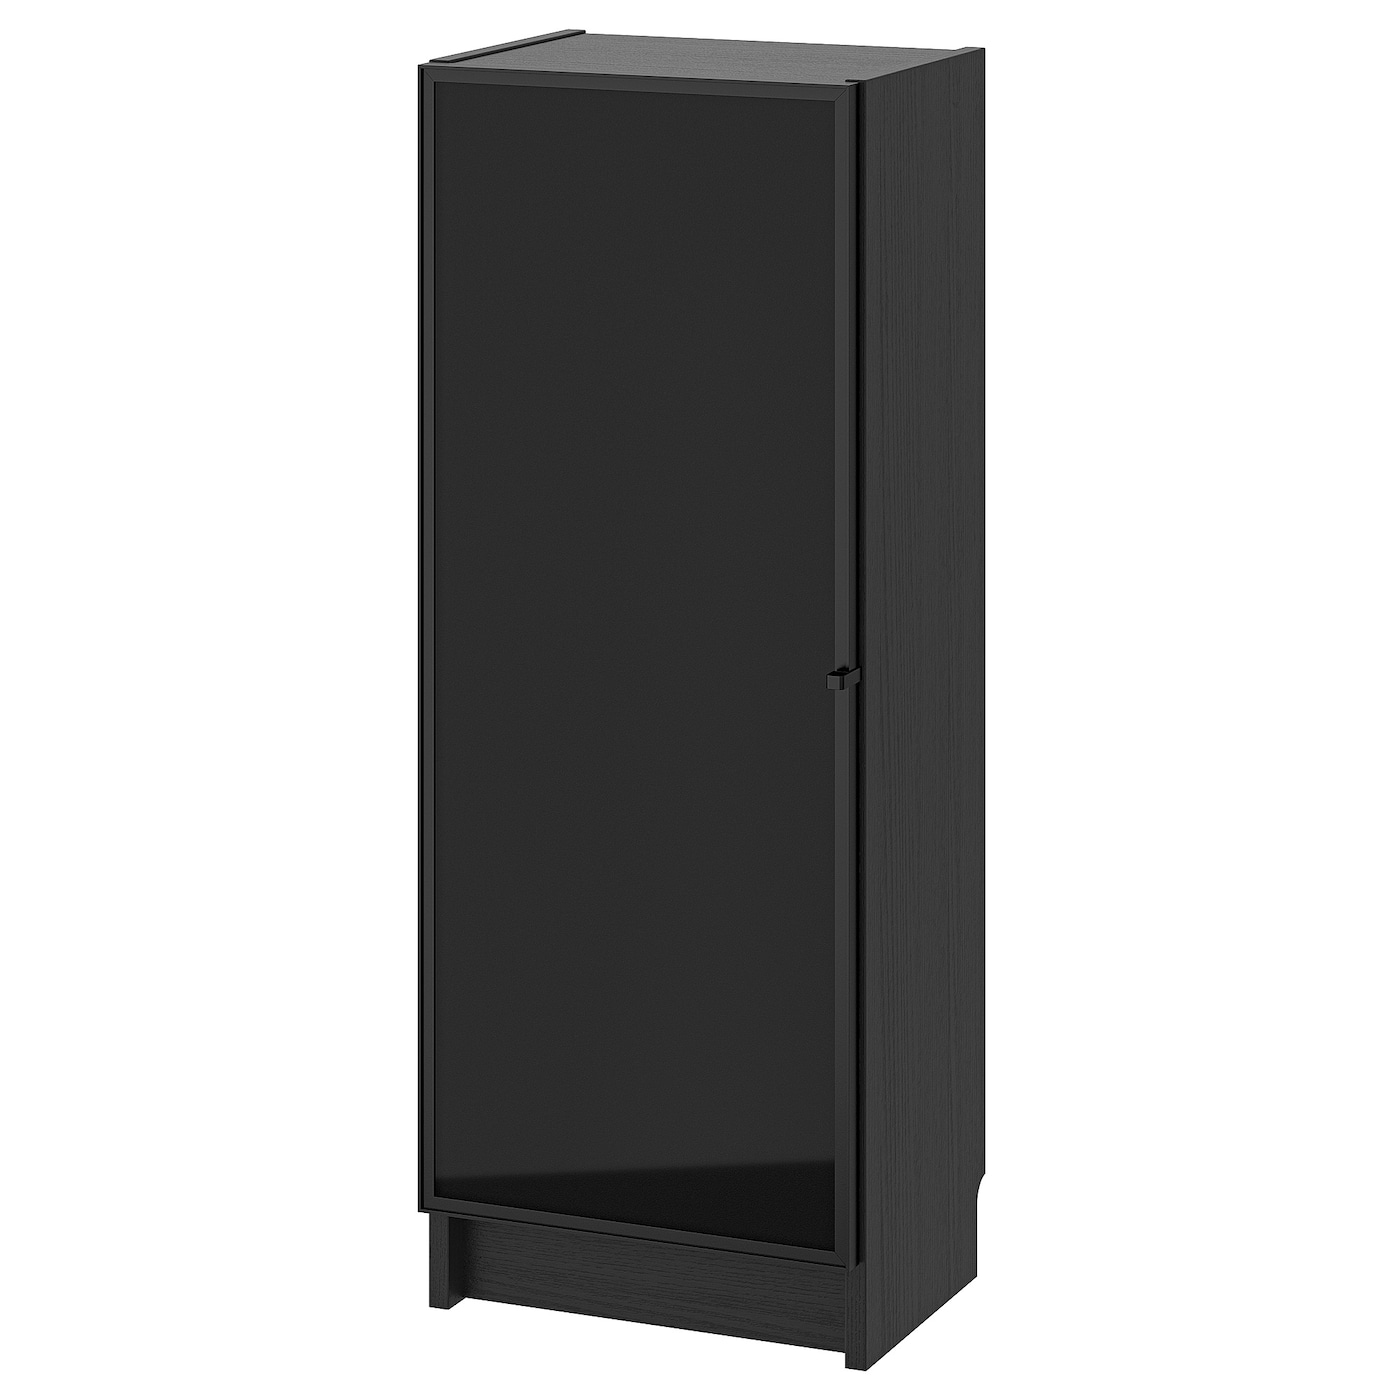 Книжный шкаф - IKEA BILLY/HÖGBO/HOGBO, 40х30х106 см, черный/черно-коричневый, БИЛЛИ/ХОГБО ИКЕА